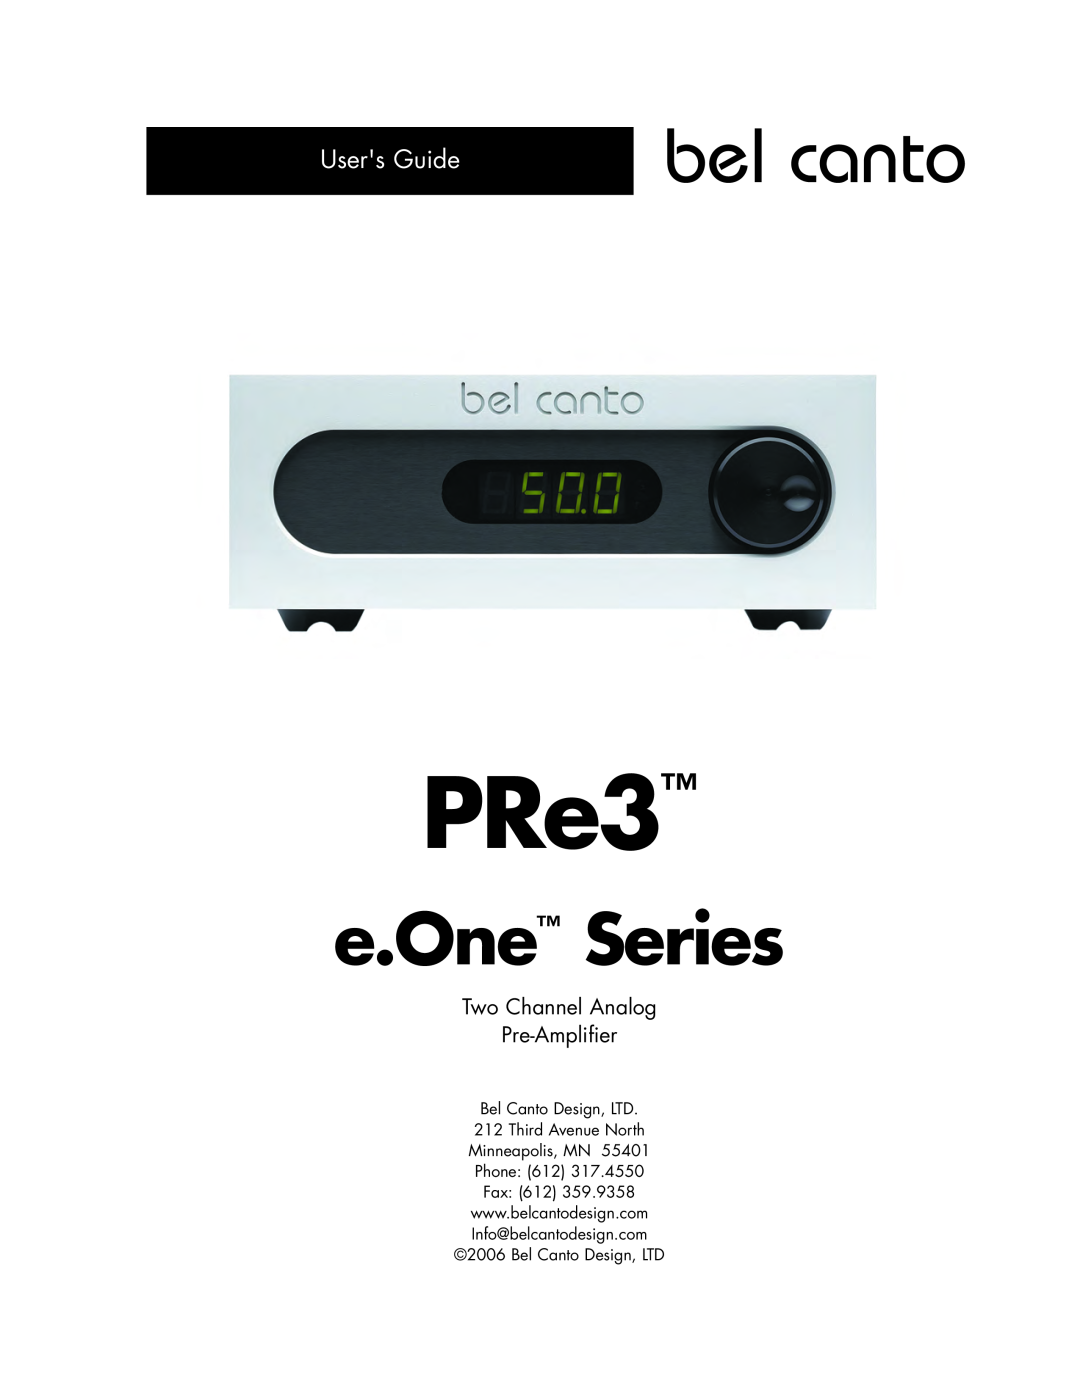 Bel Canto Design e.OneTM Series manual e.One Series, Users Guide, PRe3 